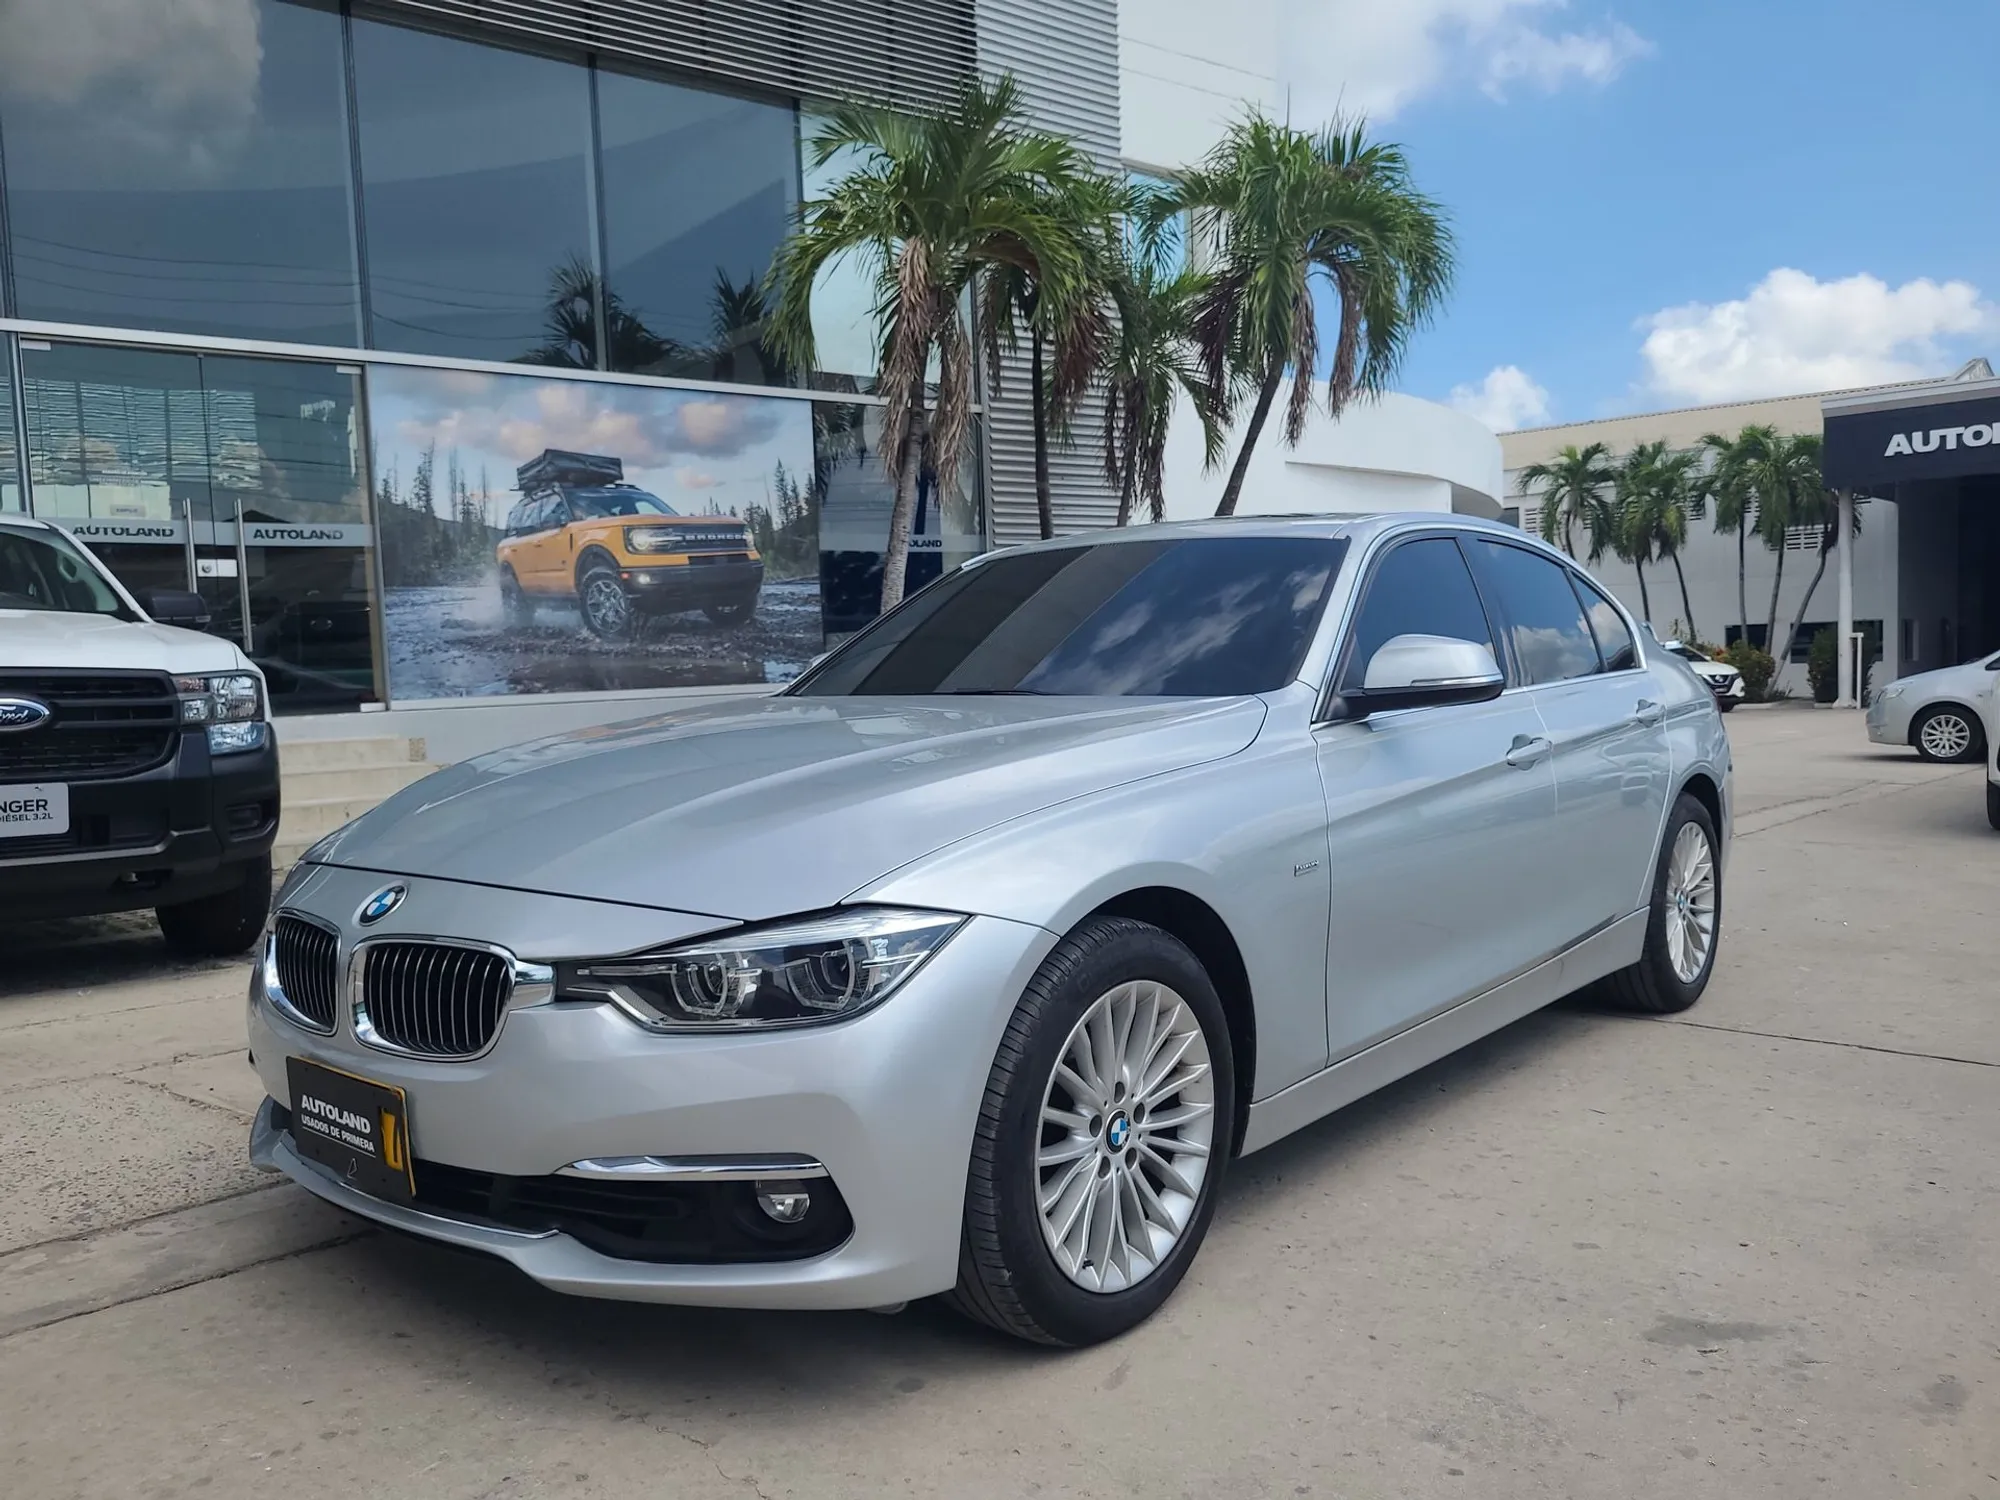 BMW 320i Luxury 2017